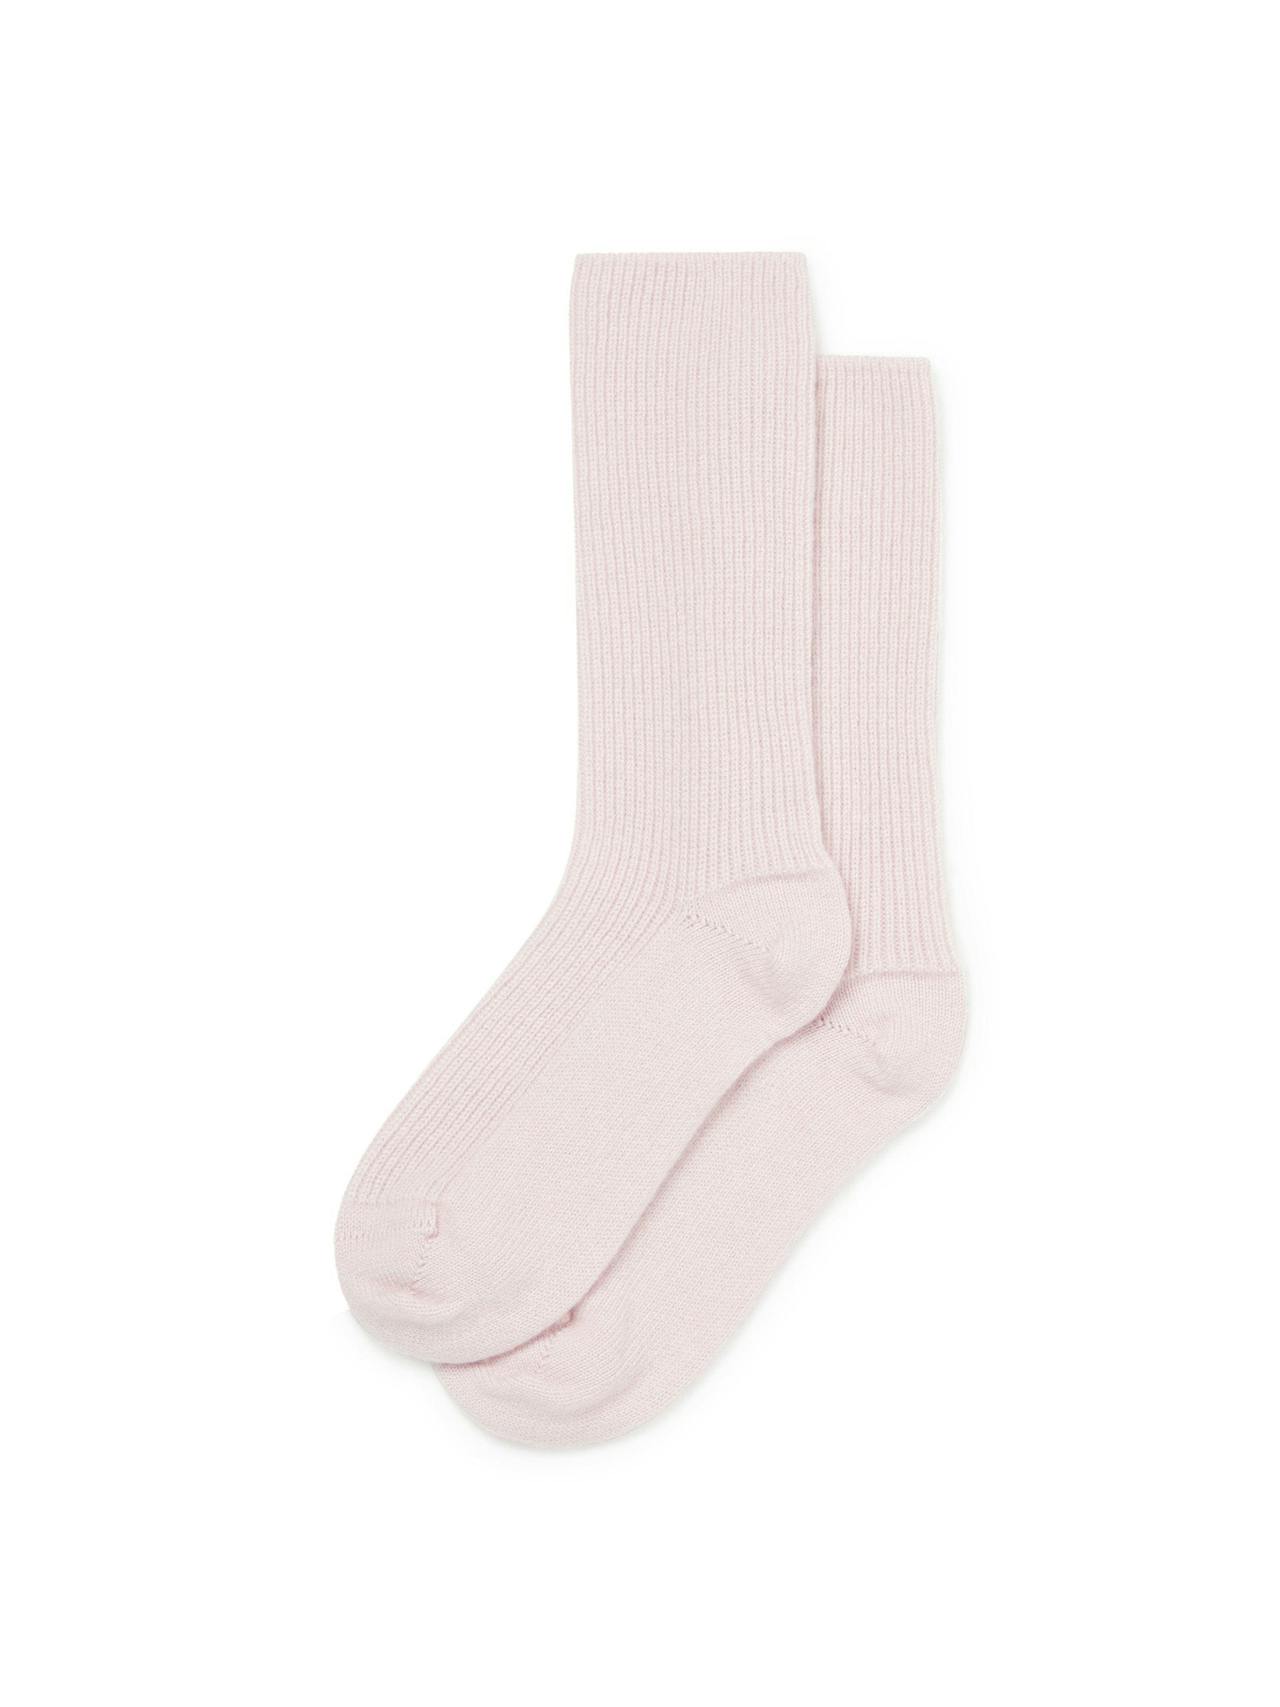 Women's rose cashmere sock